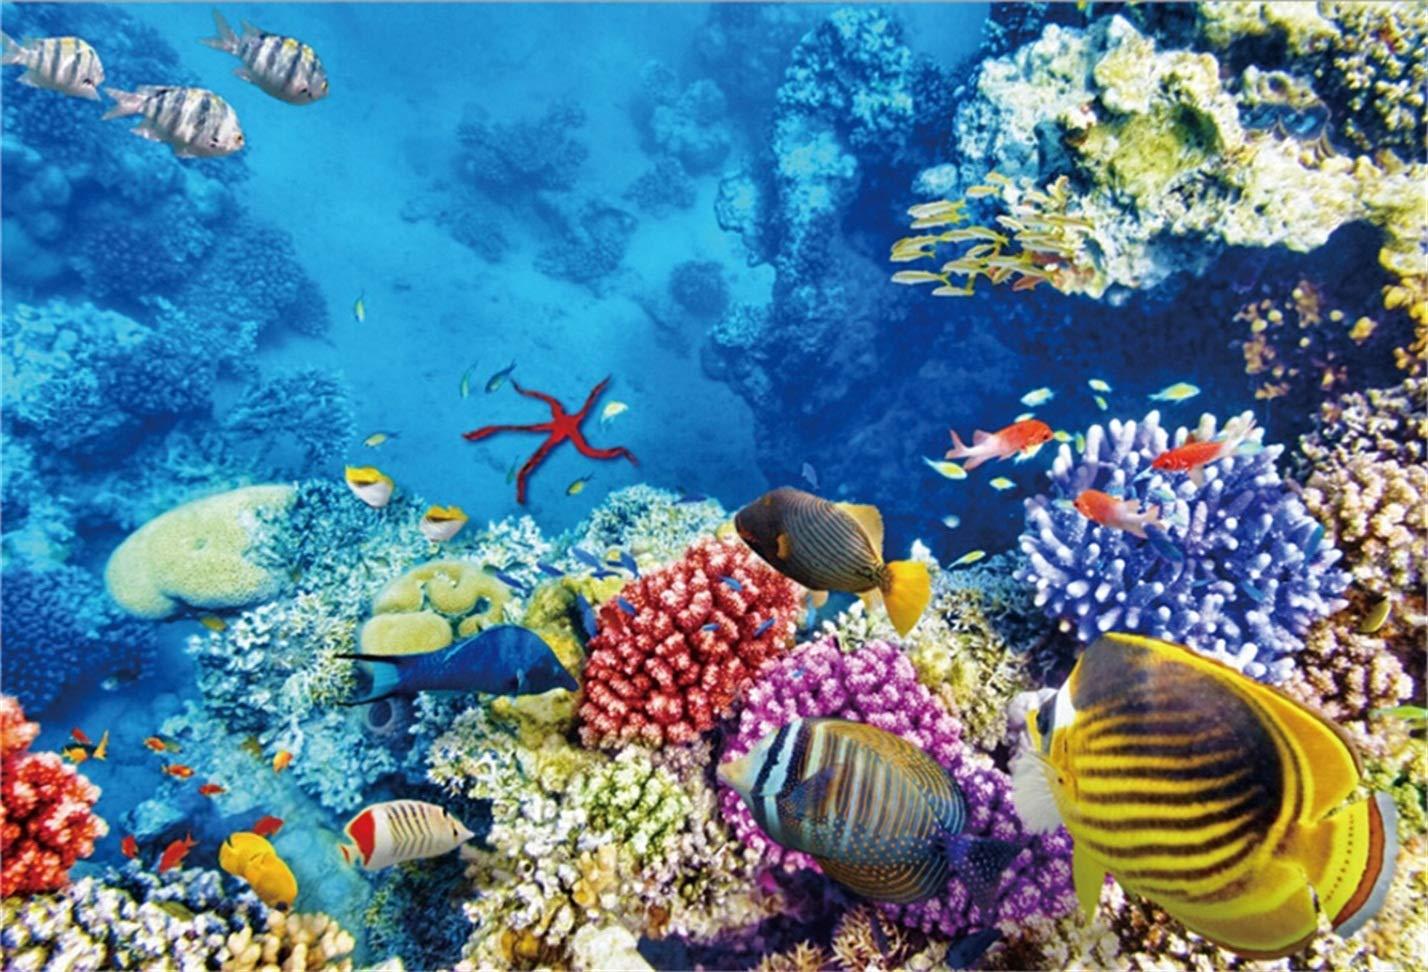 Amazon.com, CSFOTO 10x7ft Background Underwater World Marine Life